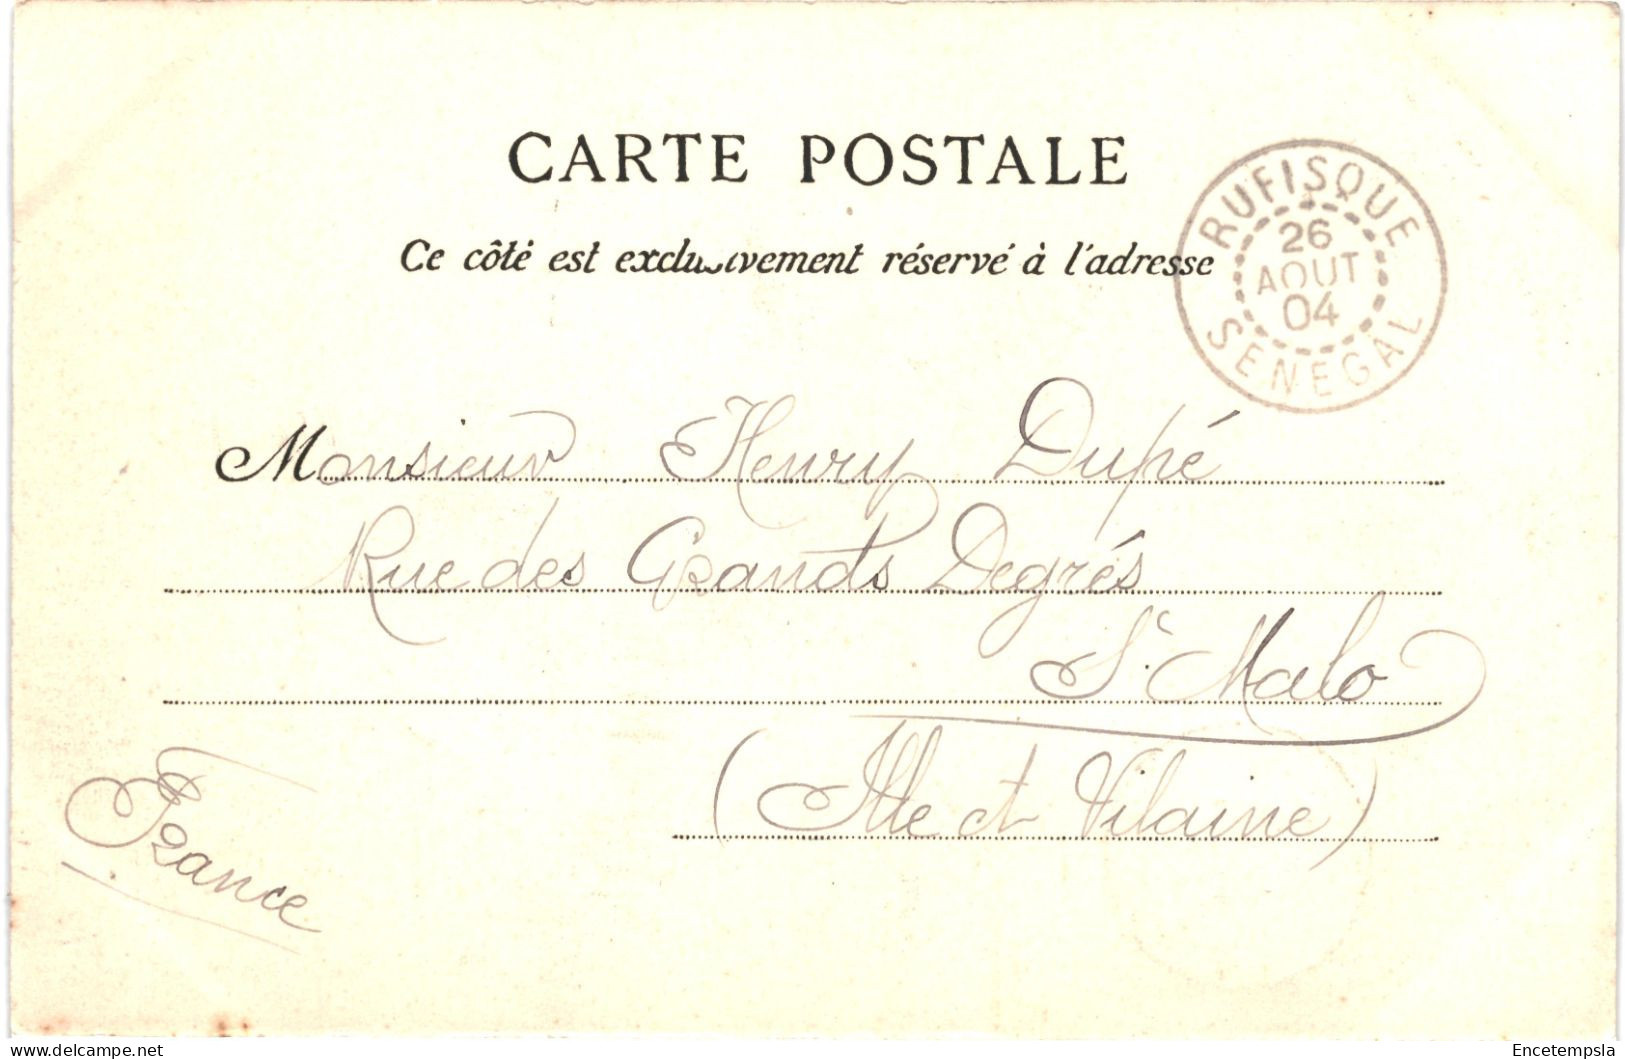 CPA Carte Postale  Sénégal Rufisque Rue Gambetta 1904 VM79823 - Senegal